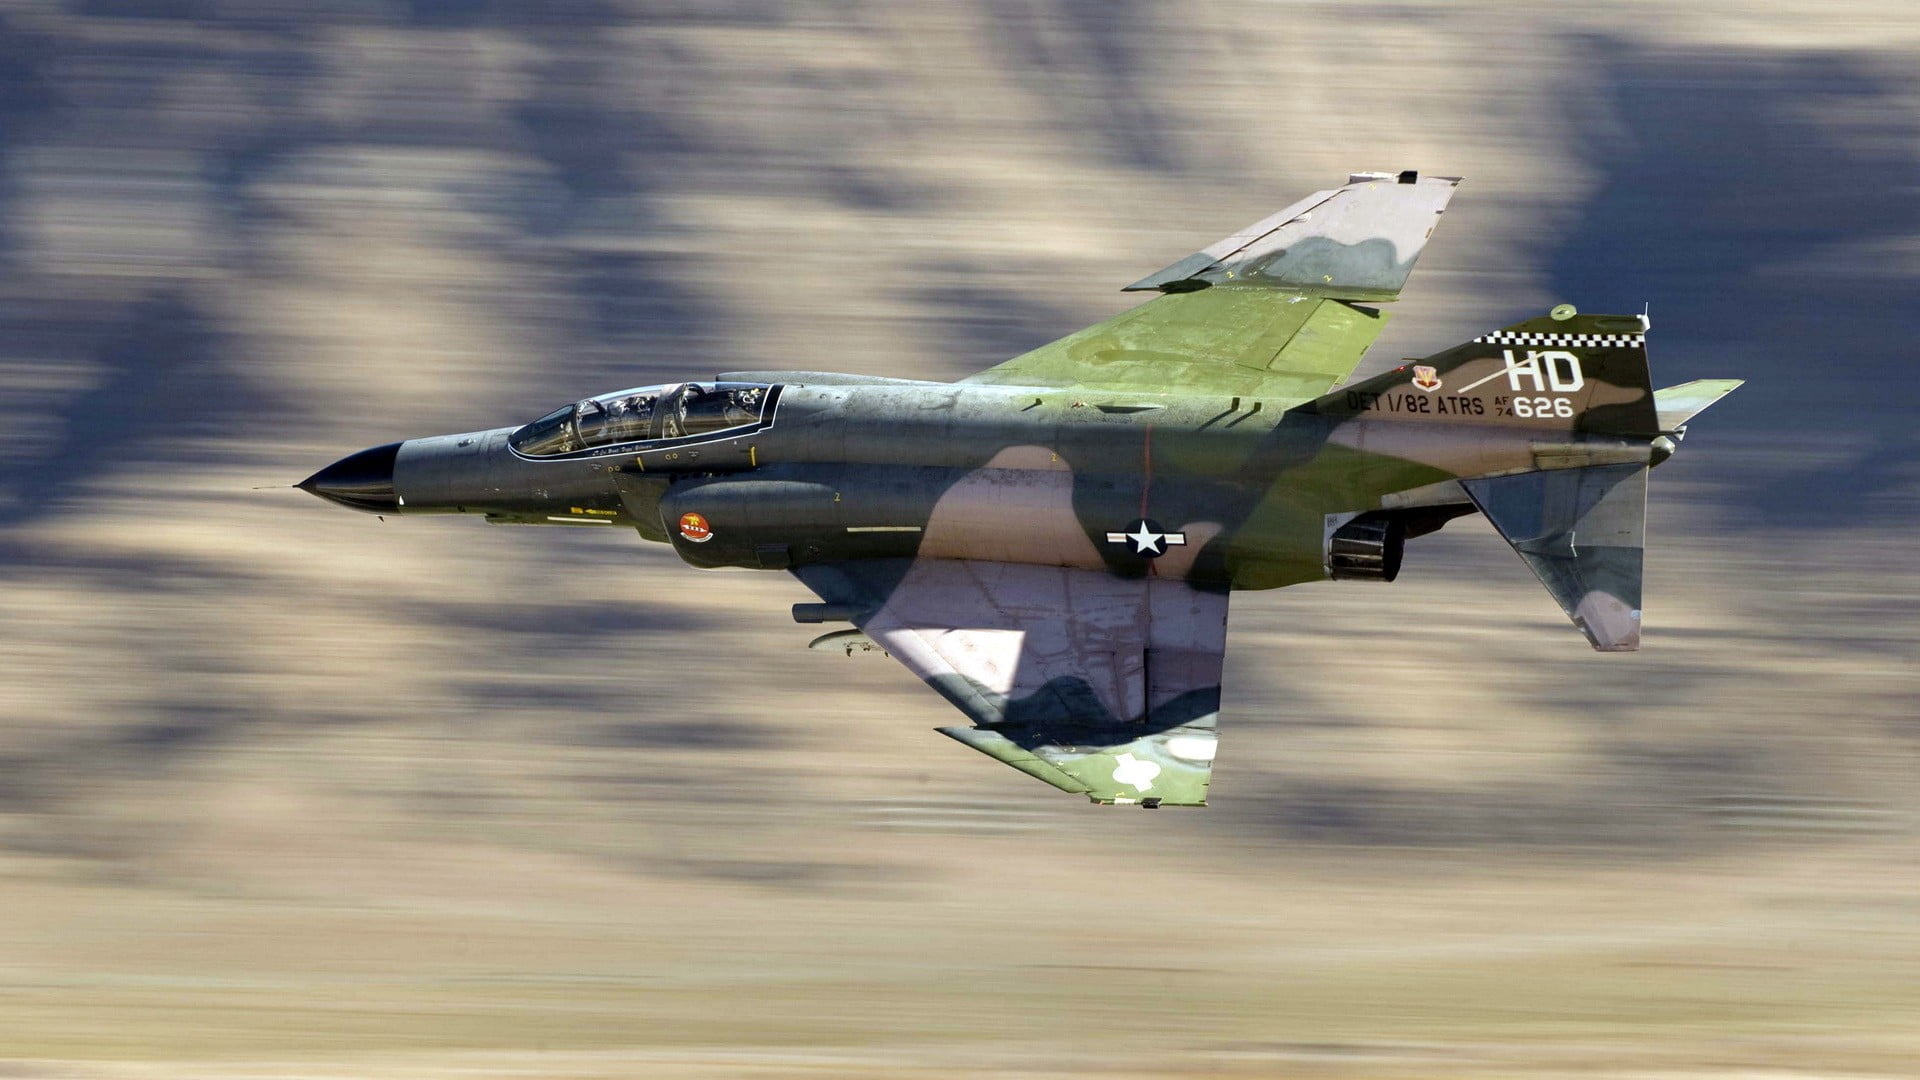 black and green compound bow, F-4 Phantom II, aircraft, military aircraft, vehicle